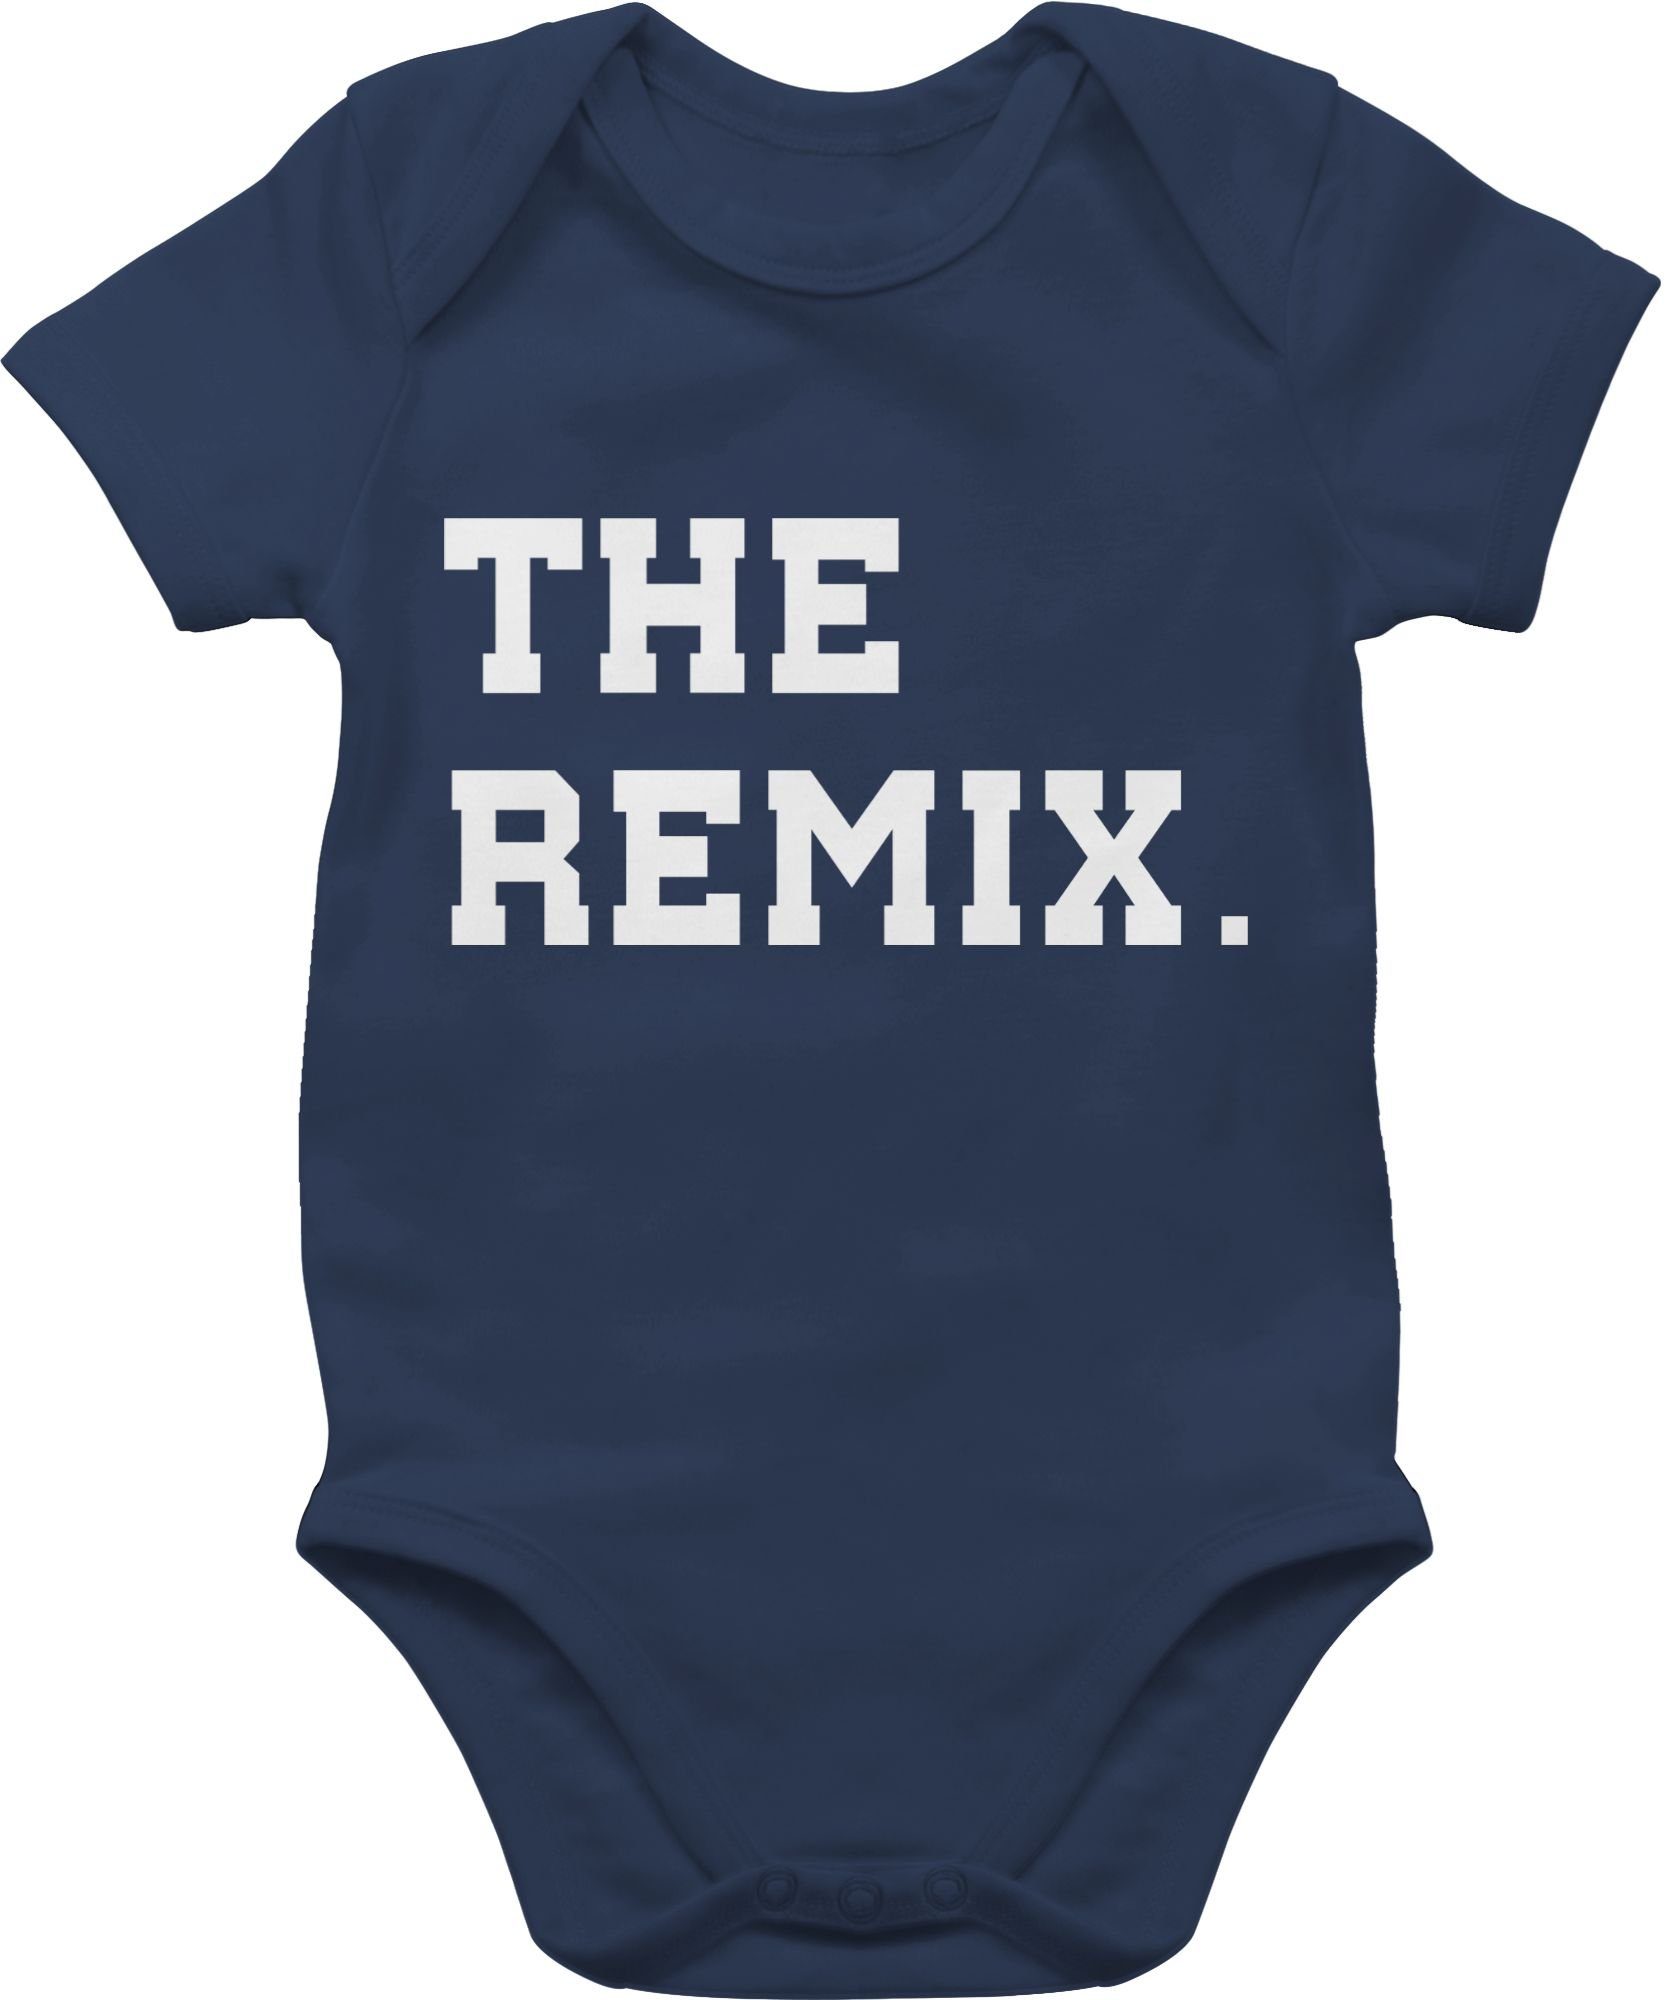 Shirtracer Shirtbody The Original The Familie Kind Navy Remix Blau Baby Partner-Look 2